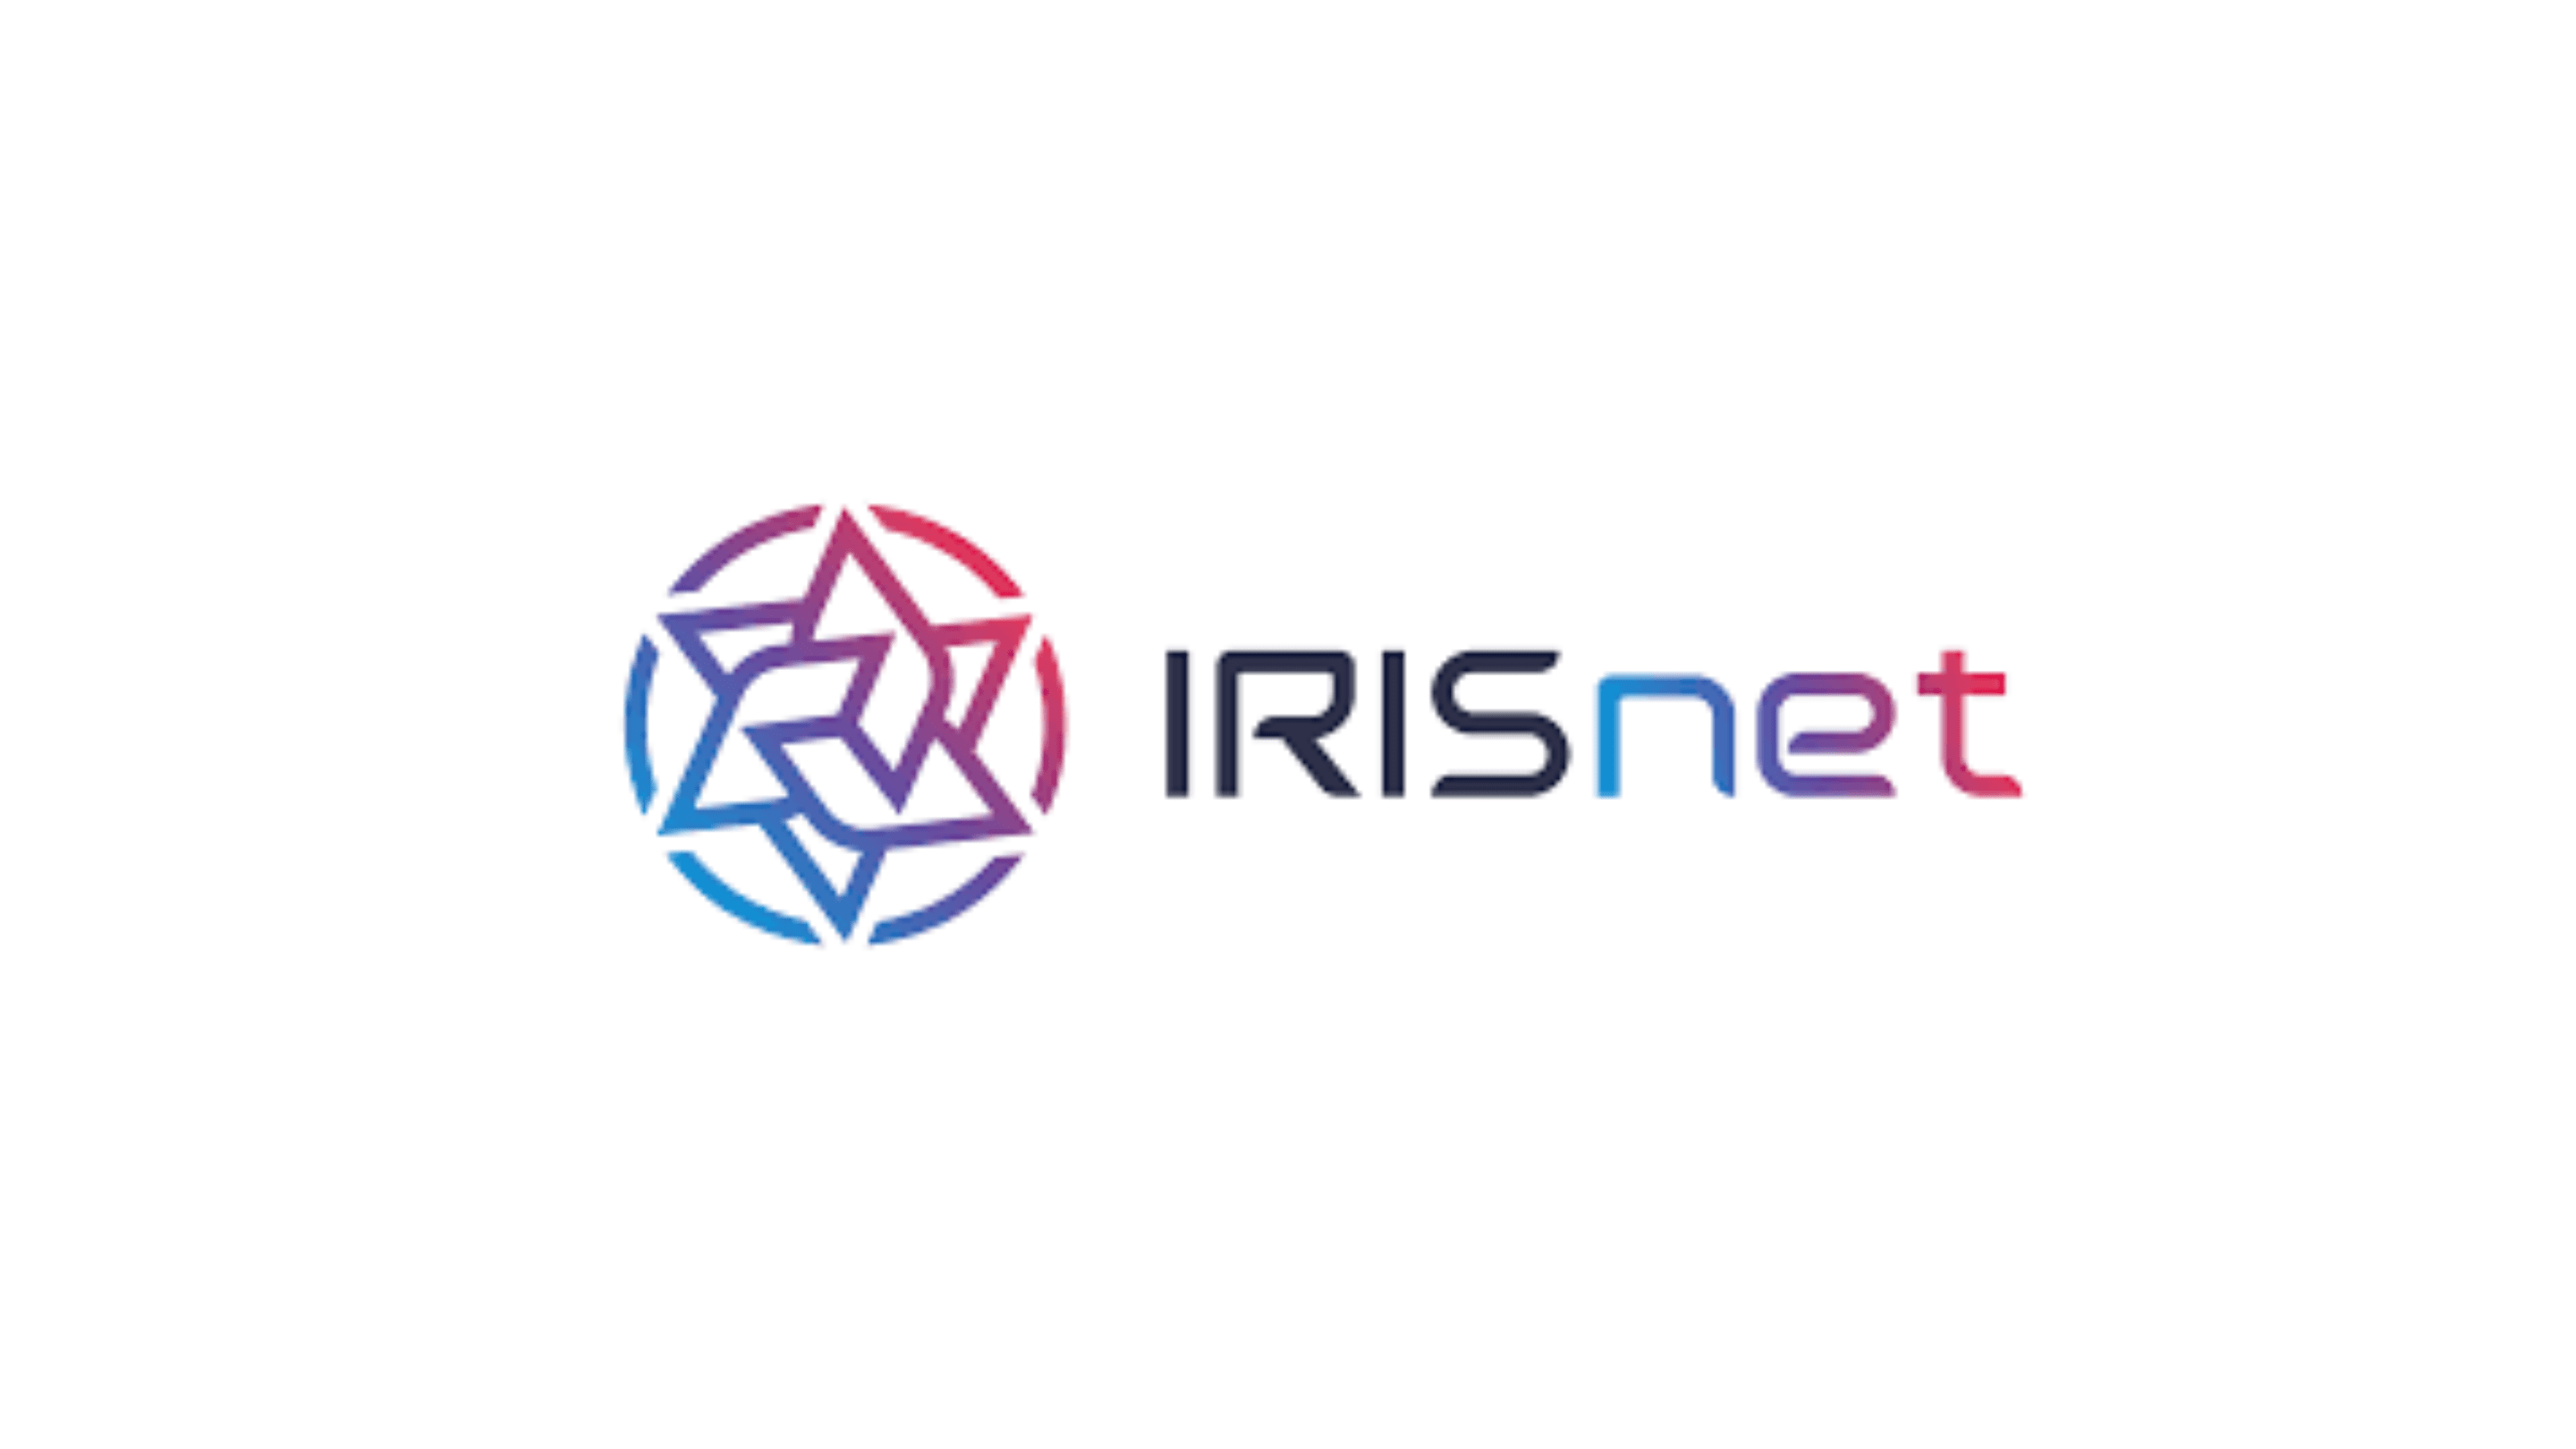 Irisnet logo